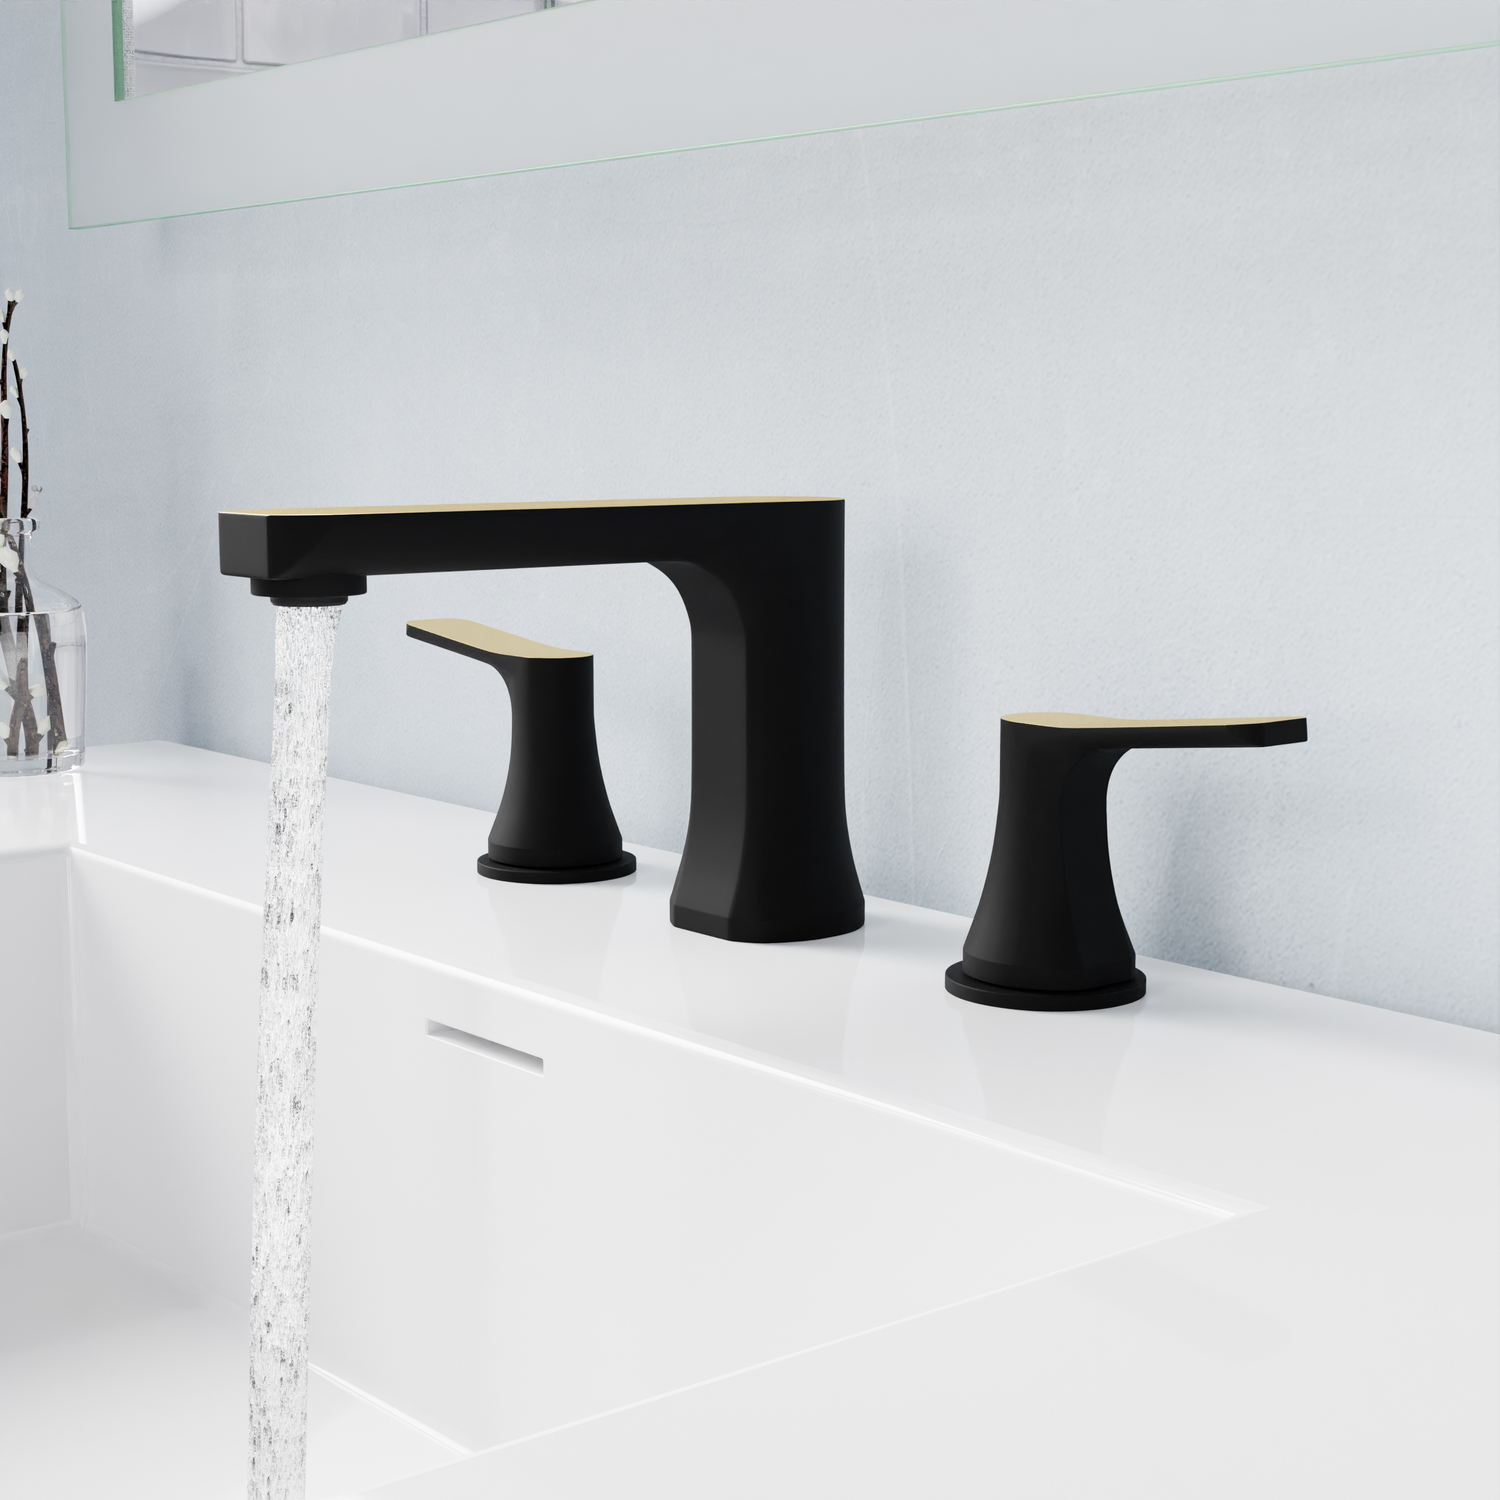 new bathroom sink with cabinet Anzzi BATHROOM - Faucets - Bathroom Sink Faucets - Wide Spread Black